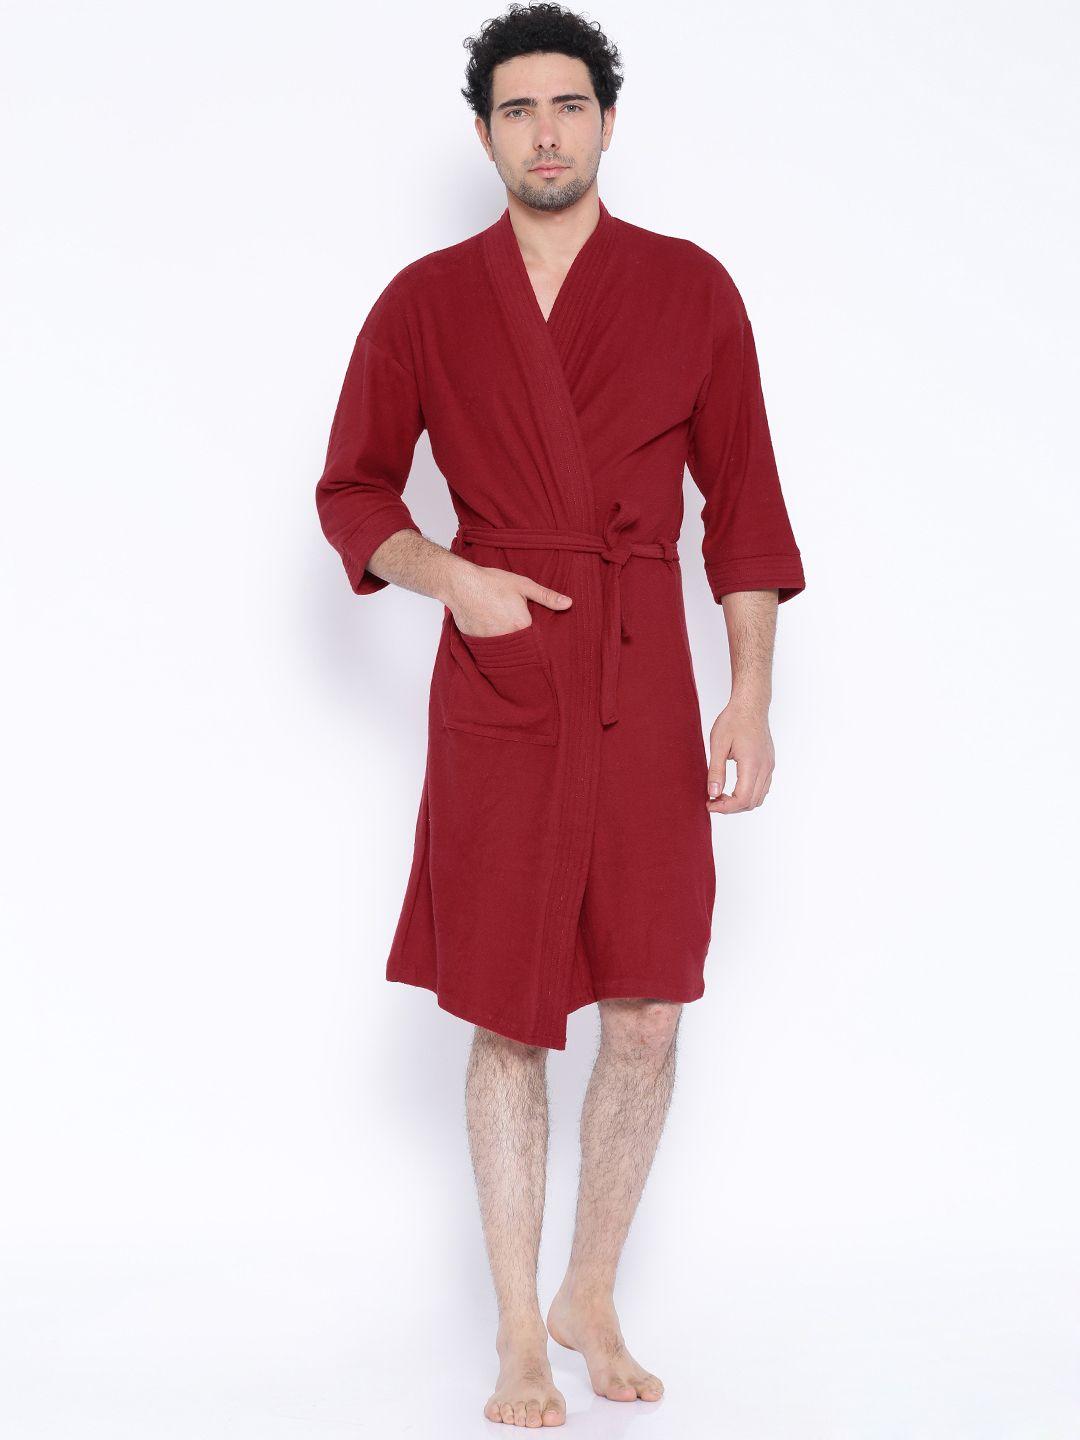 sand dune red bathrobe